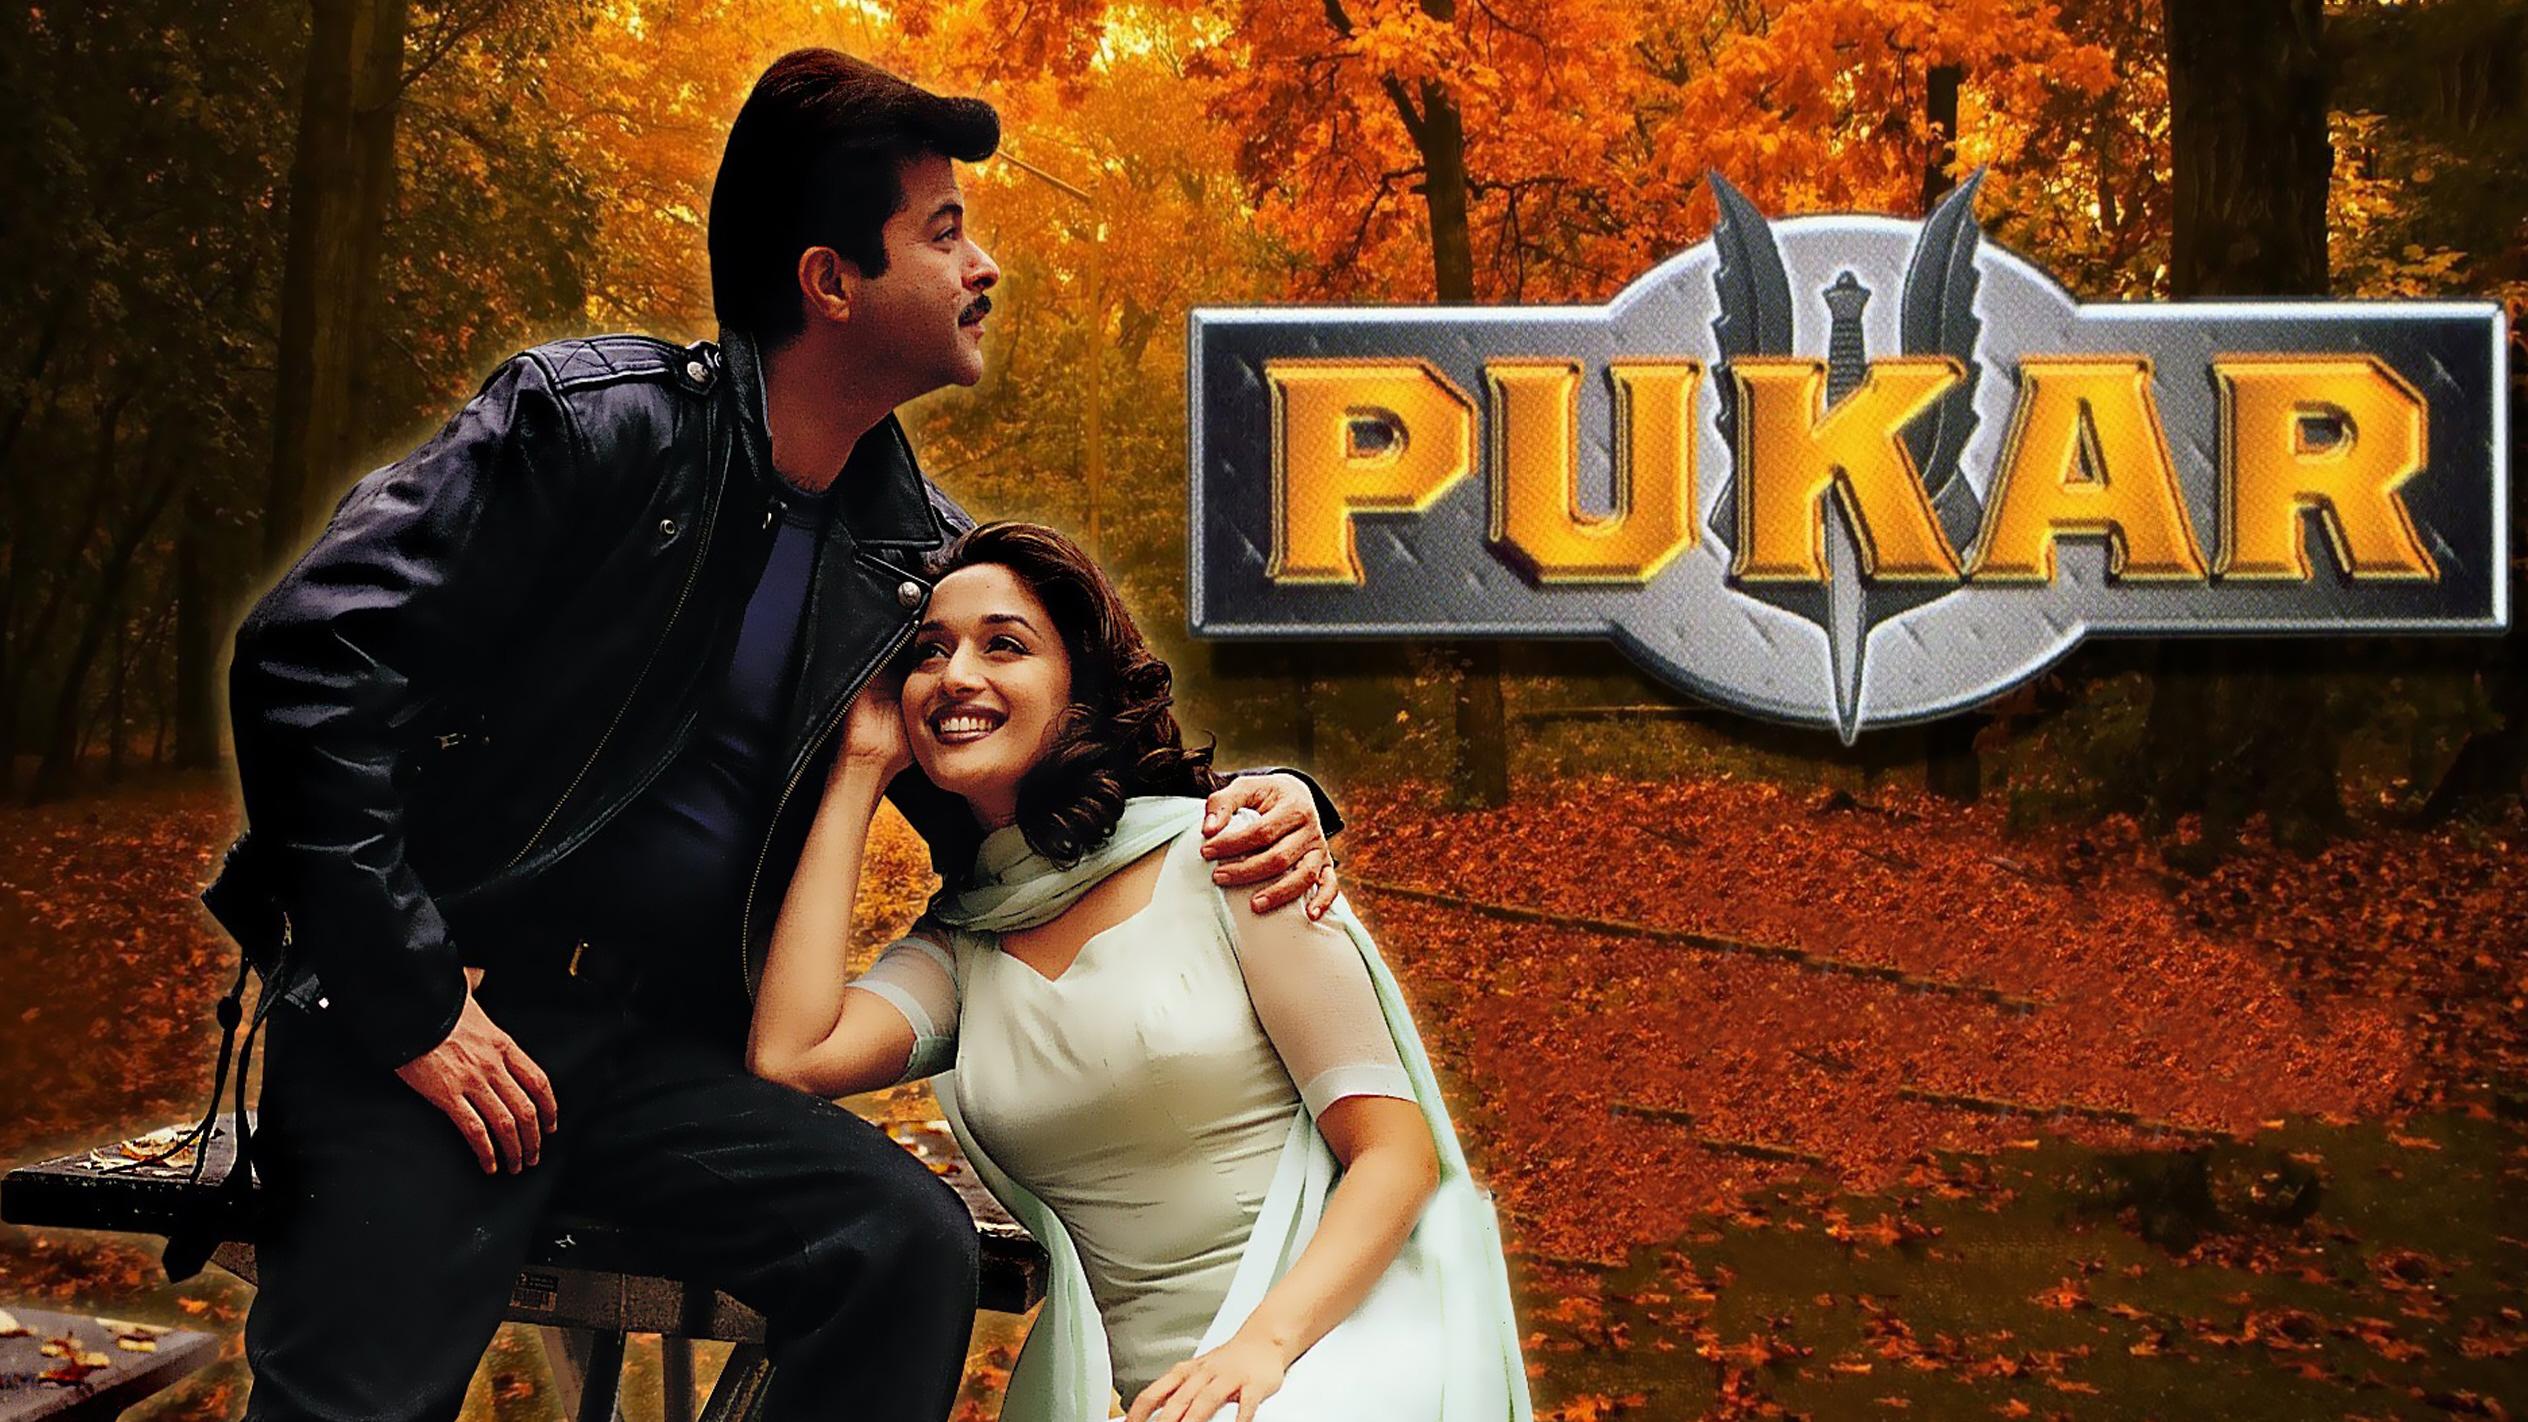 watch hindi movie pukar online for free